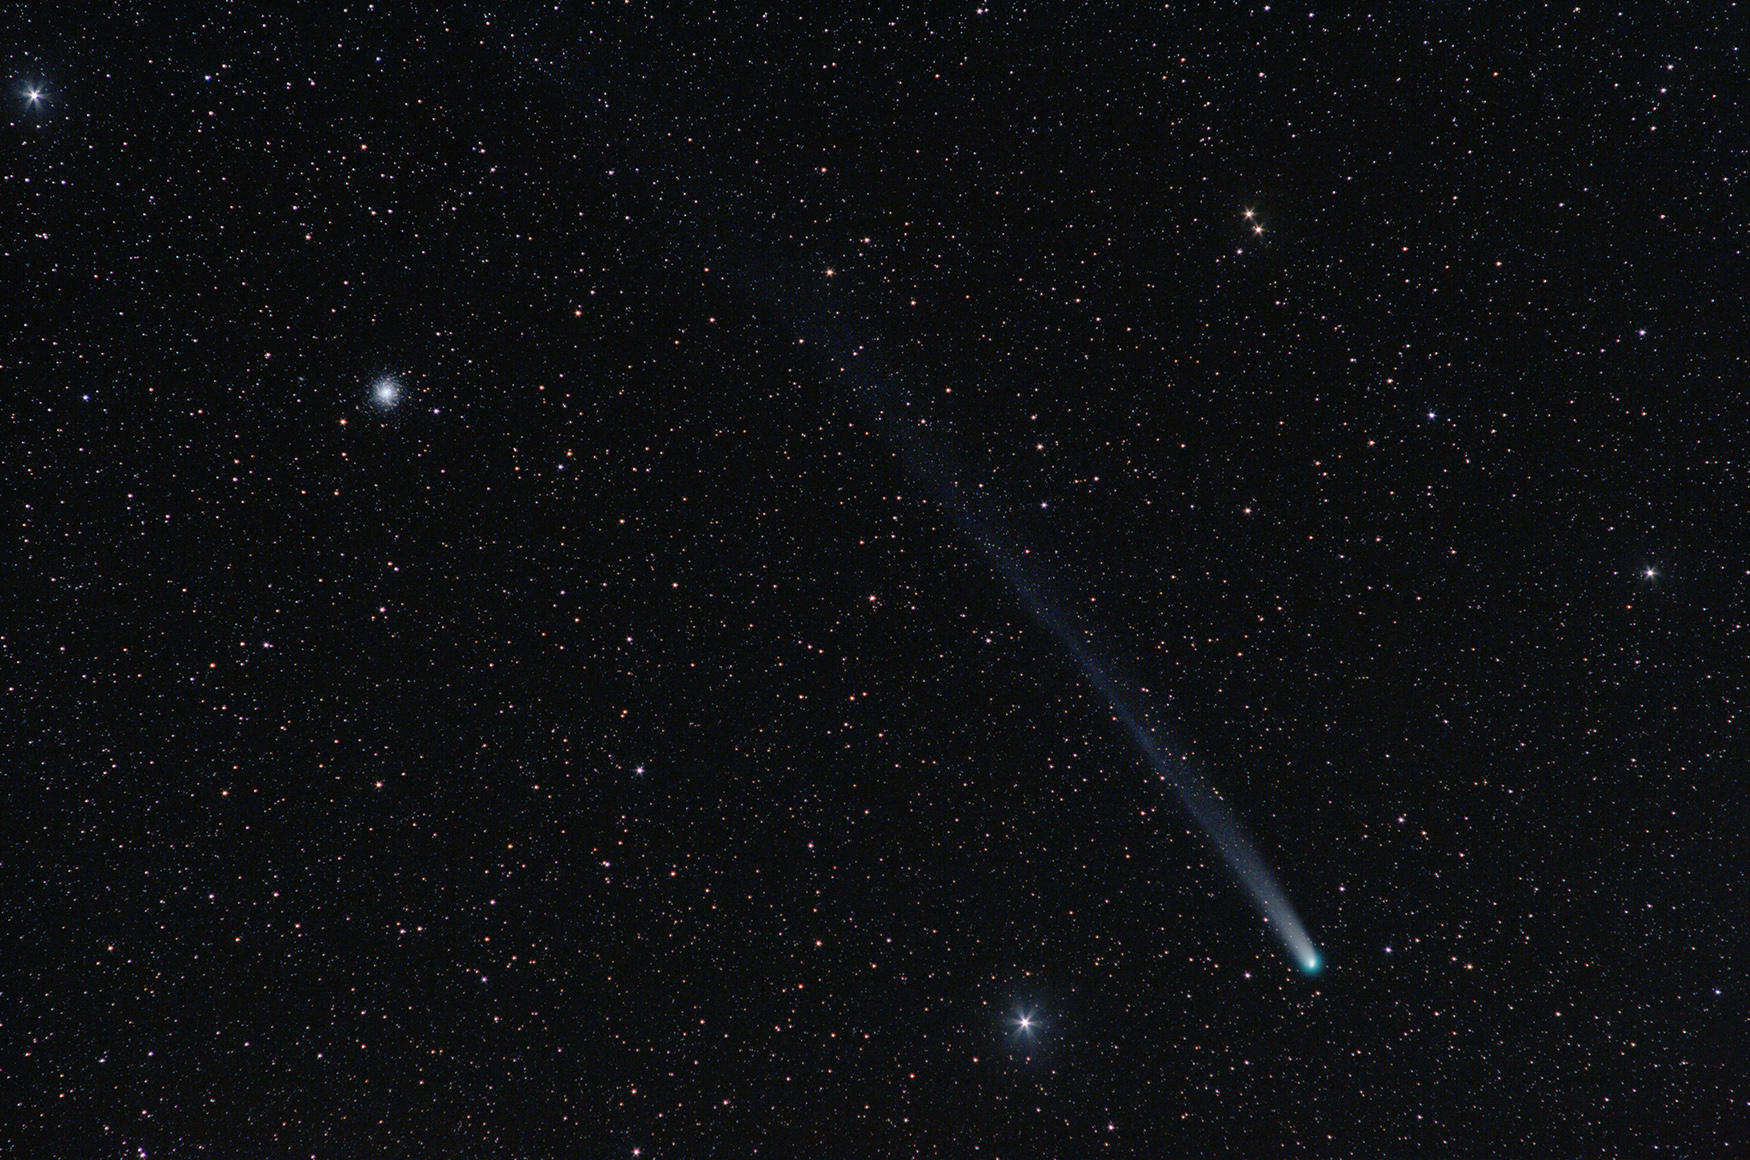 kometa 2013 R1 (Lovejoy) u M13